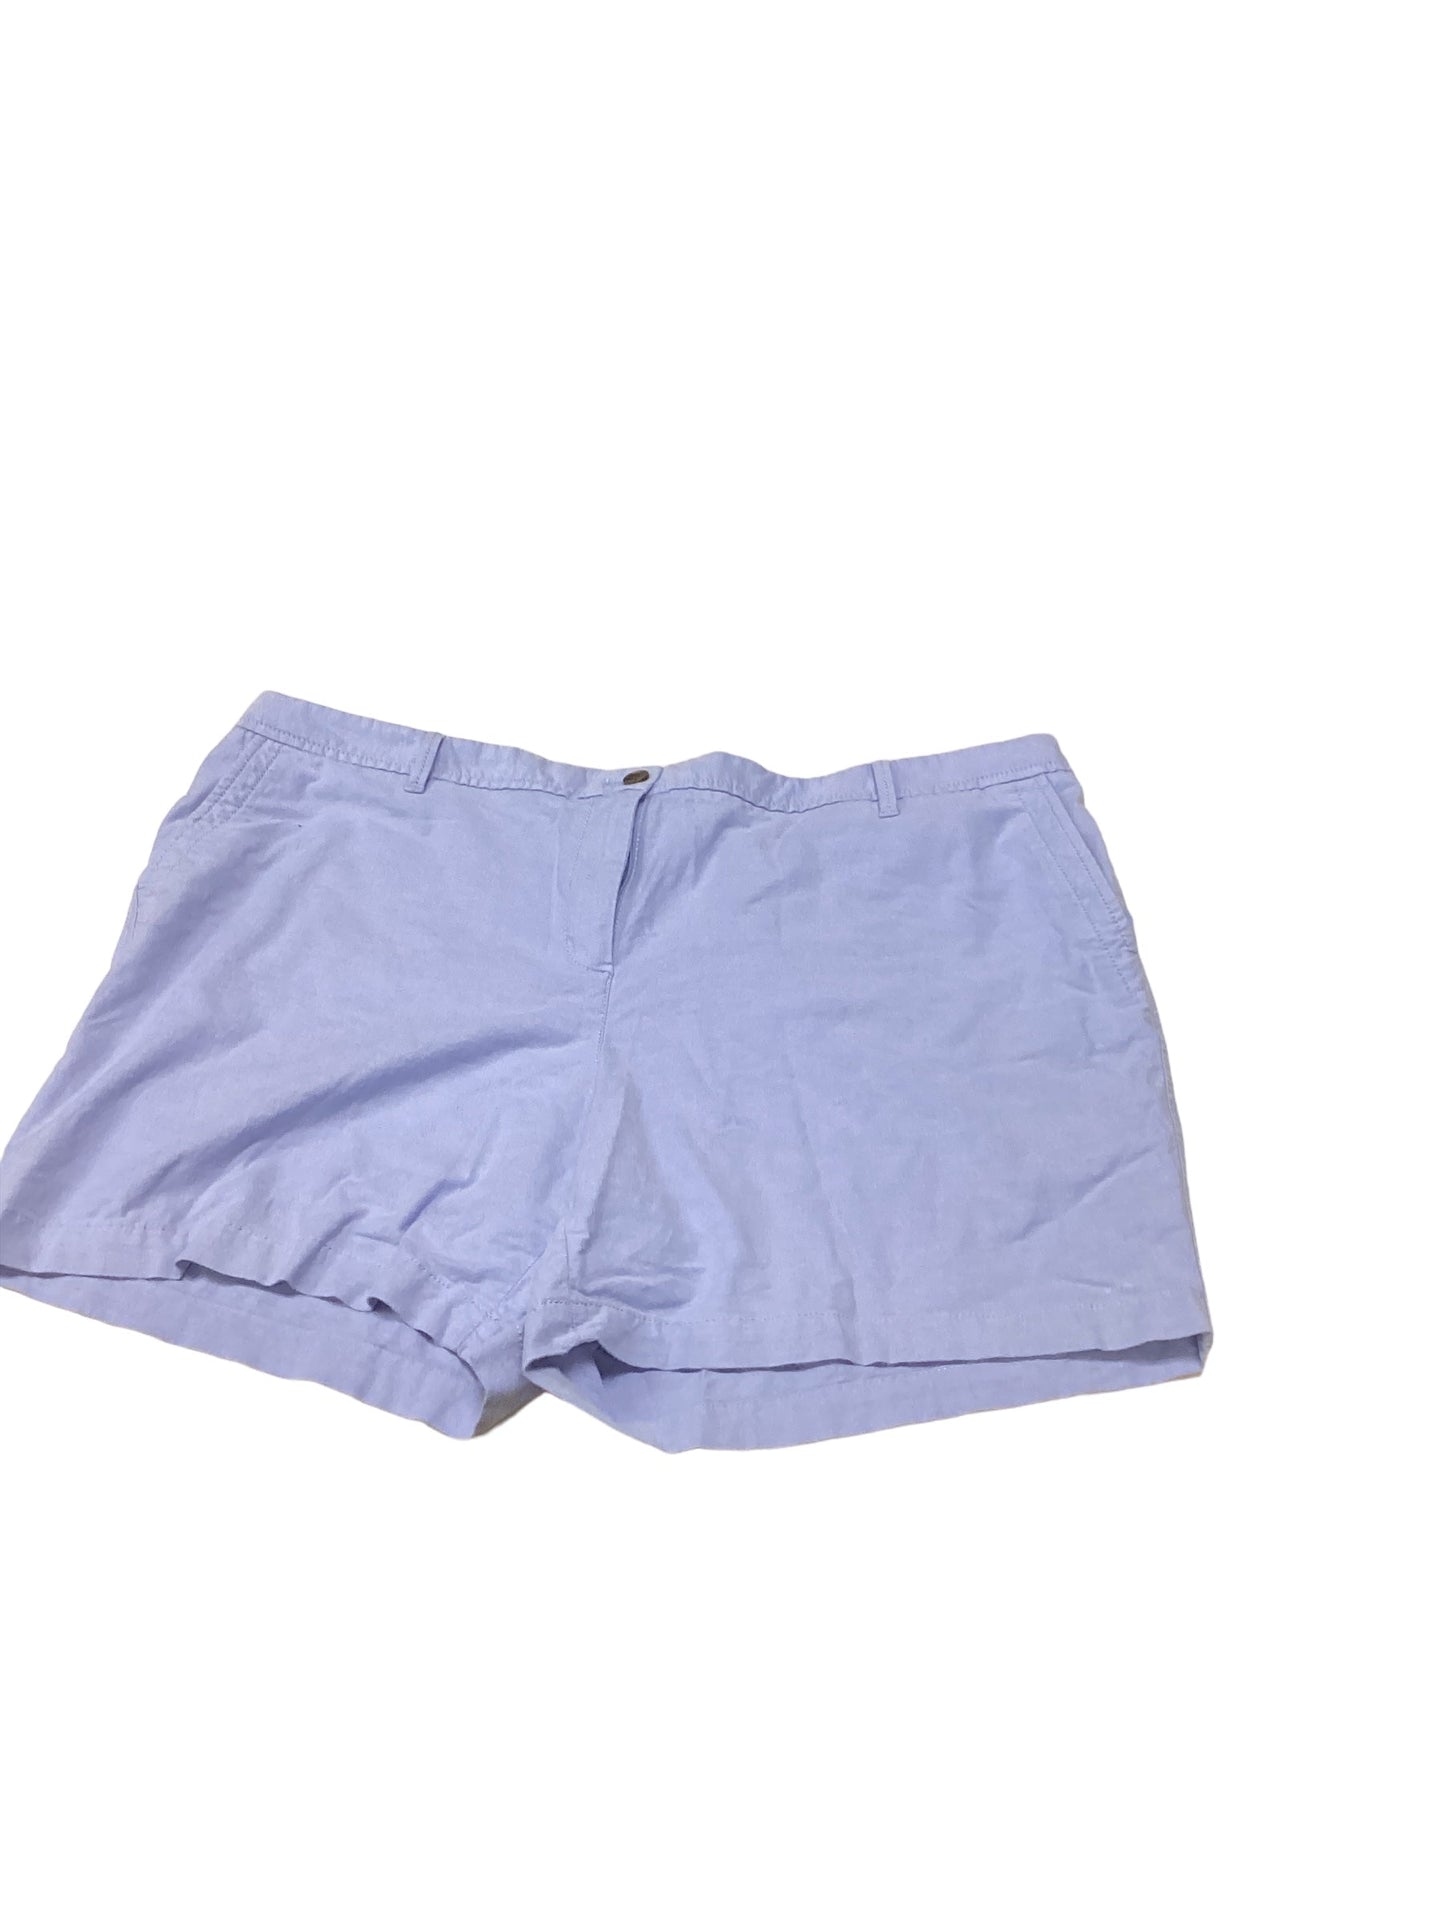 Blue Shorts Talbots, Size 20